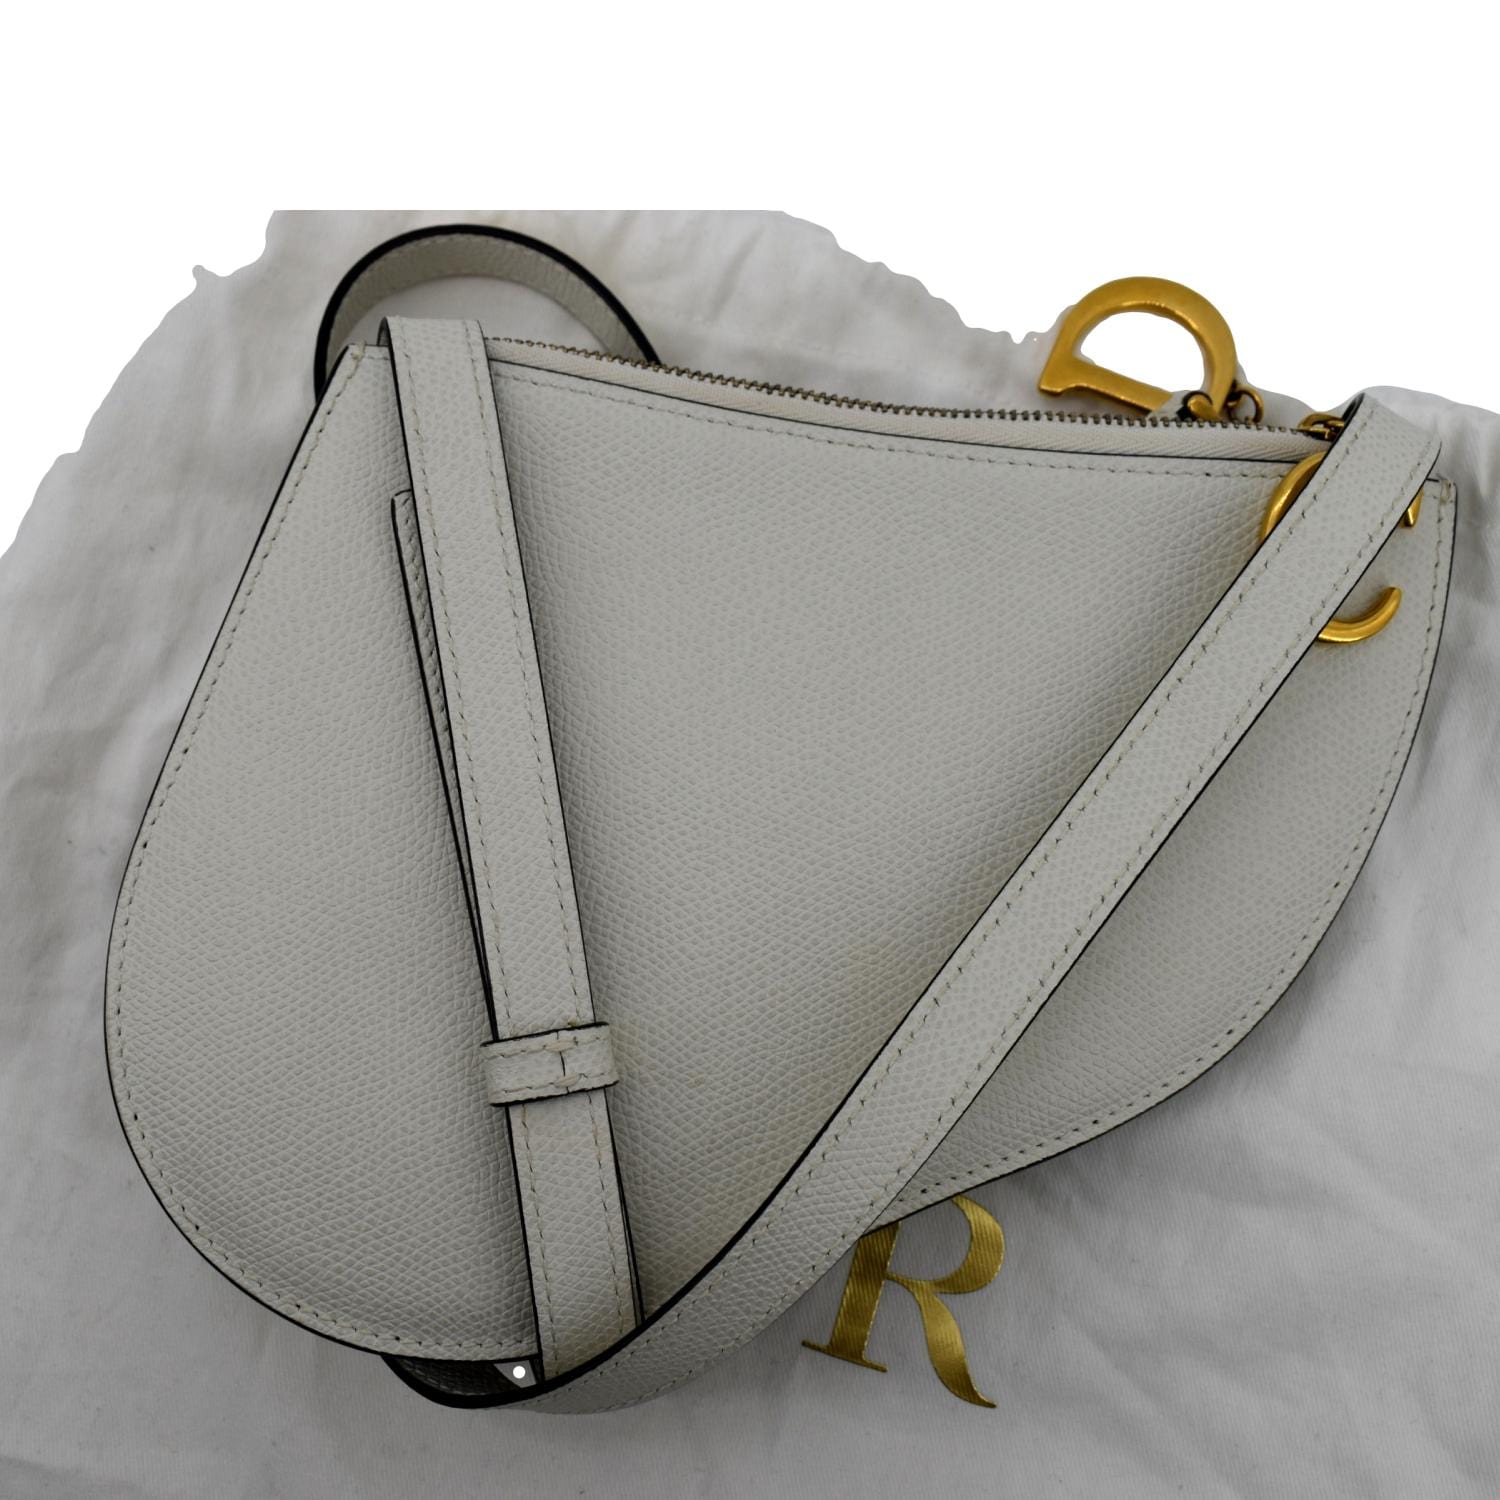 Trio leather handbag